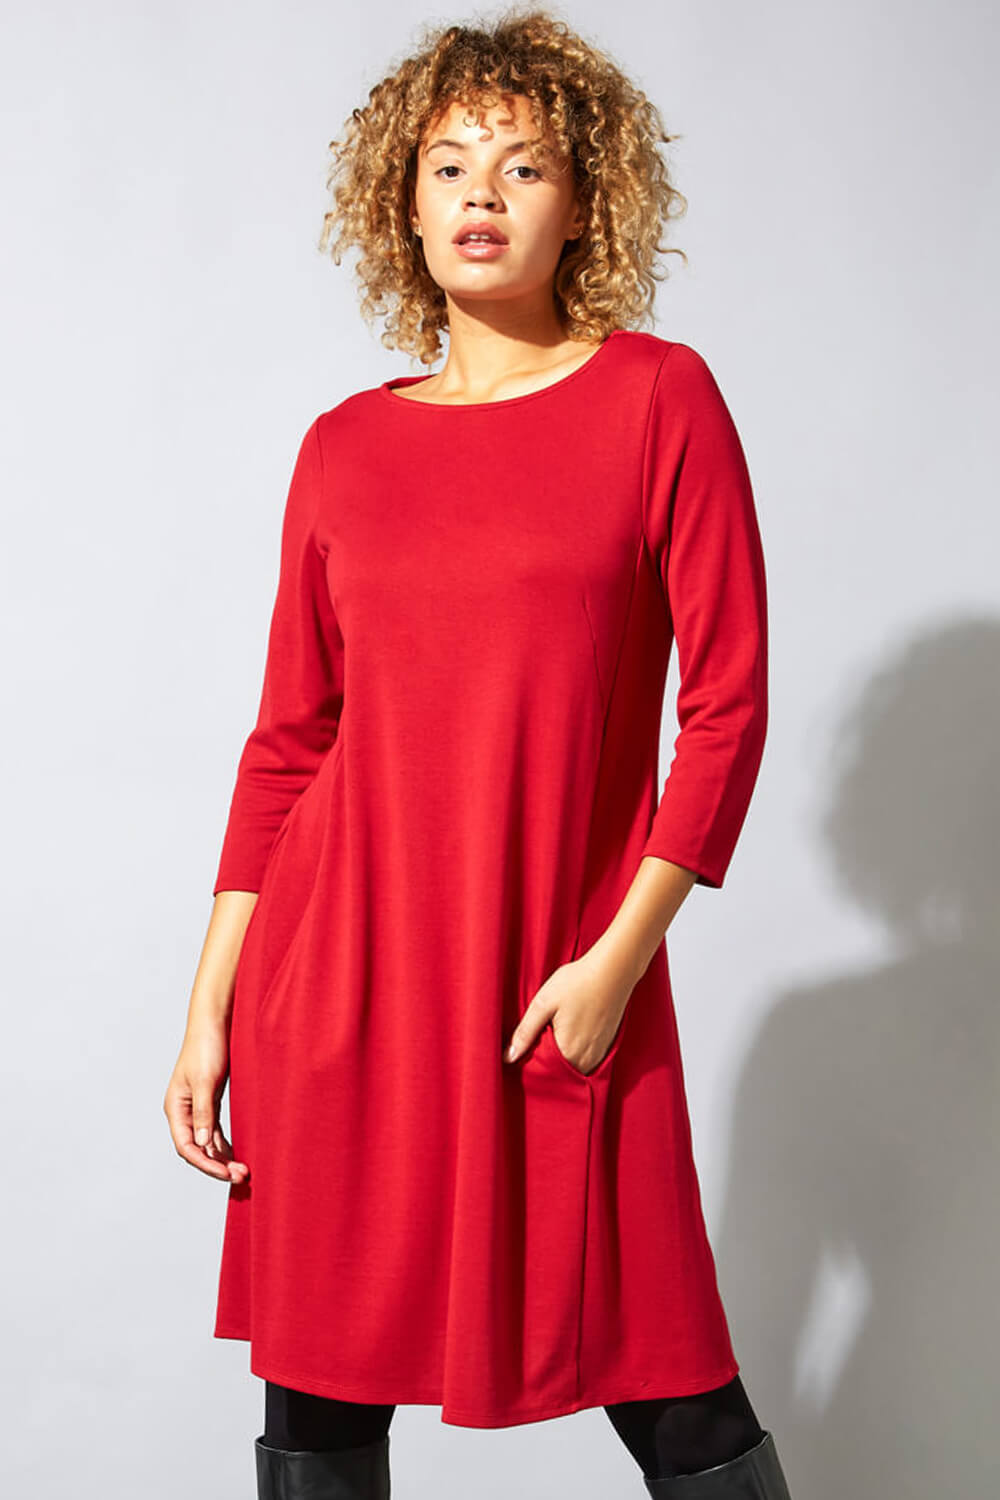 A-Line Pocket Detail Swing Dress in Red - Roman Originals UK